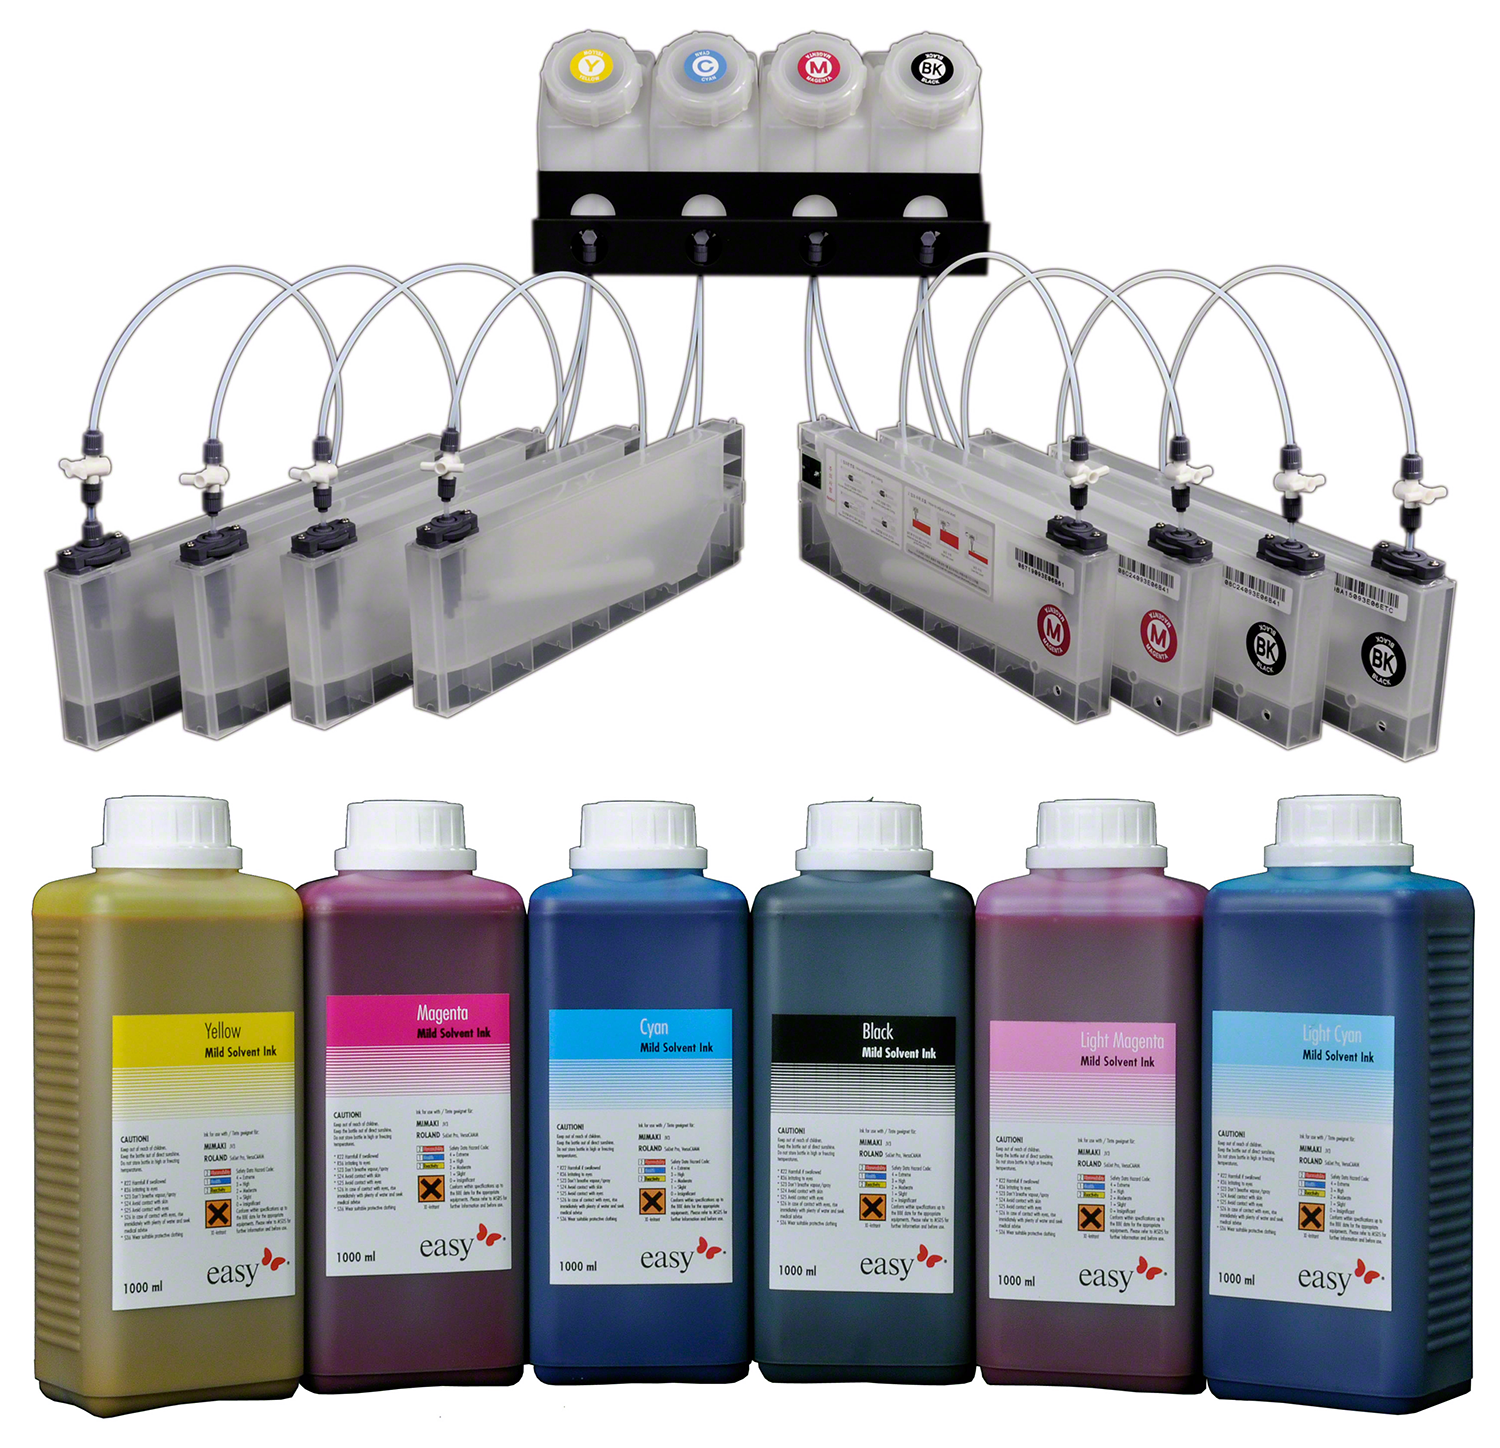 Blockoffer easyTank Ink Supply System with 4 tanks and 8 cartridges for Mimaki JV3, inkl. 1 liter solvent ink per color